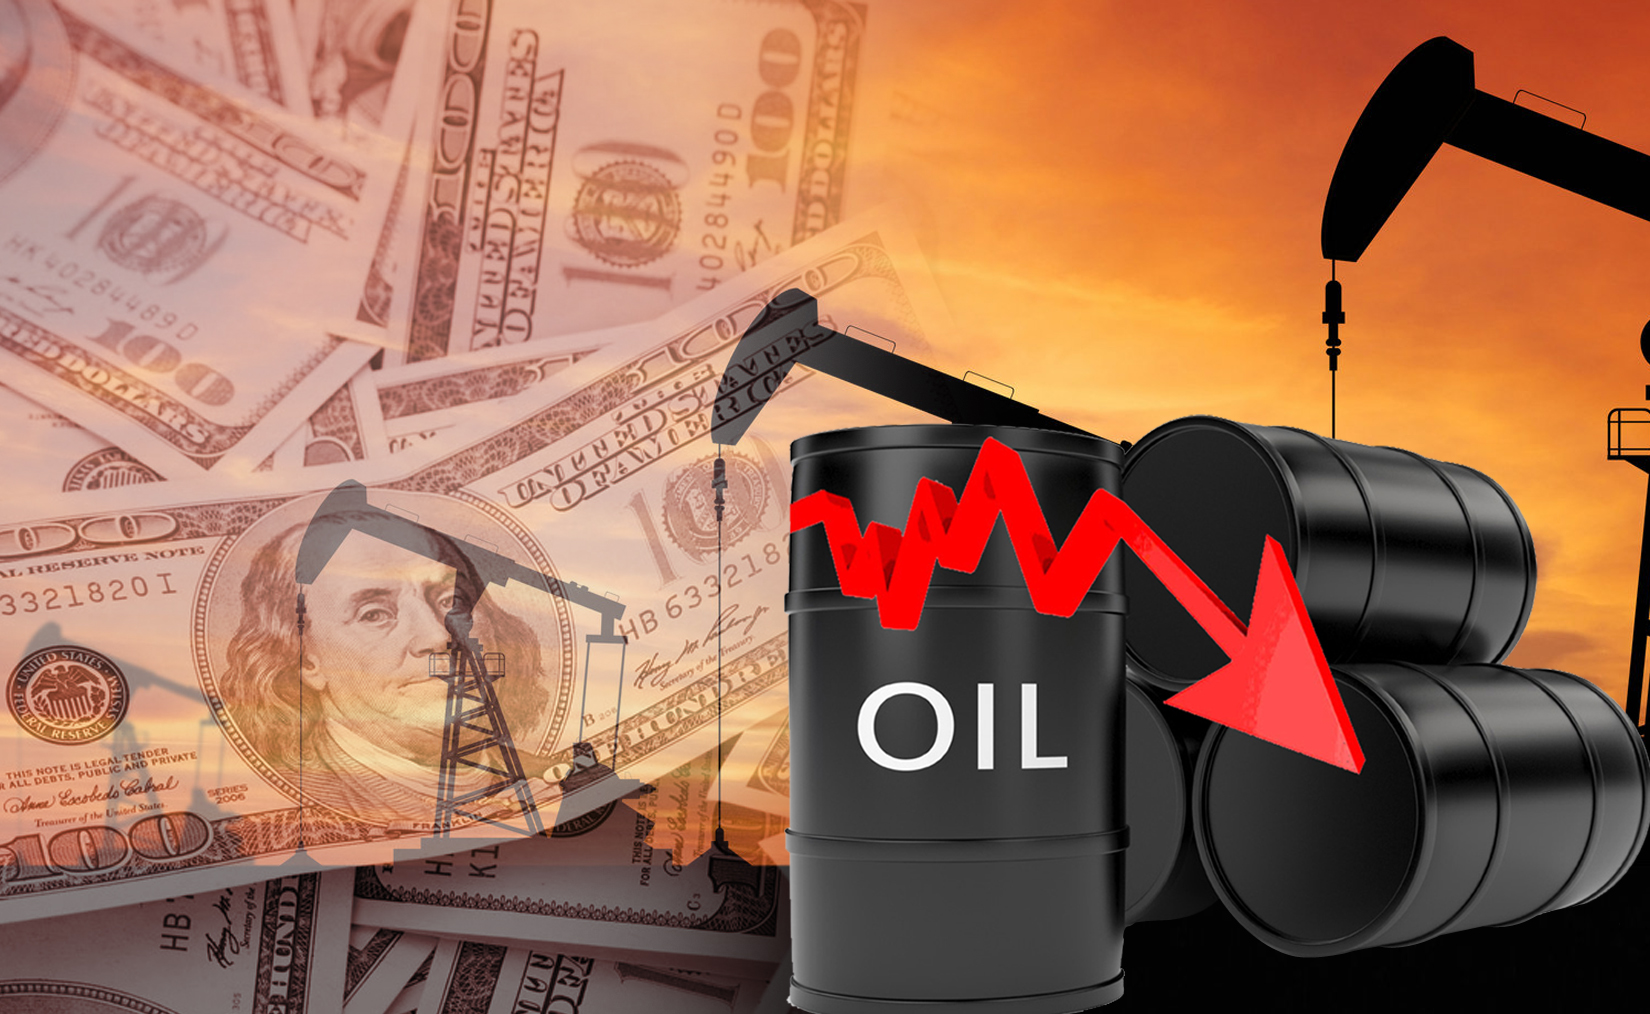 Kuwait crude oil drop 33 cents to USD 44.87 pb - KPC                                                                                                                                                                                                      